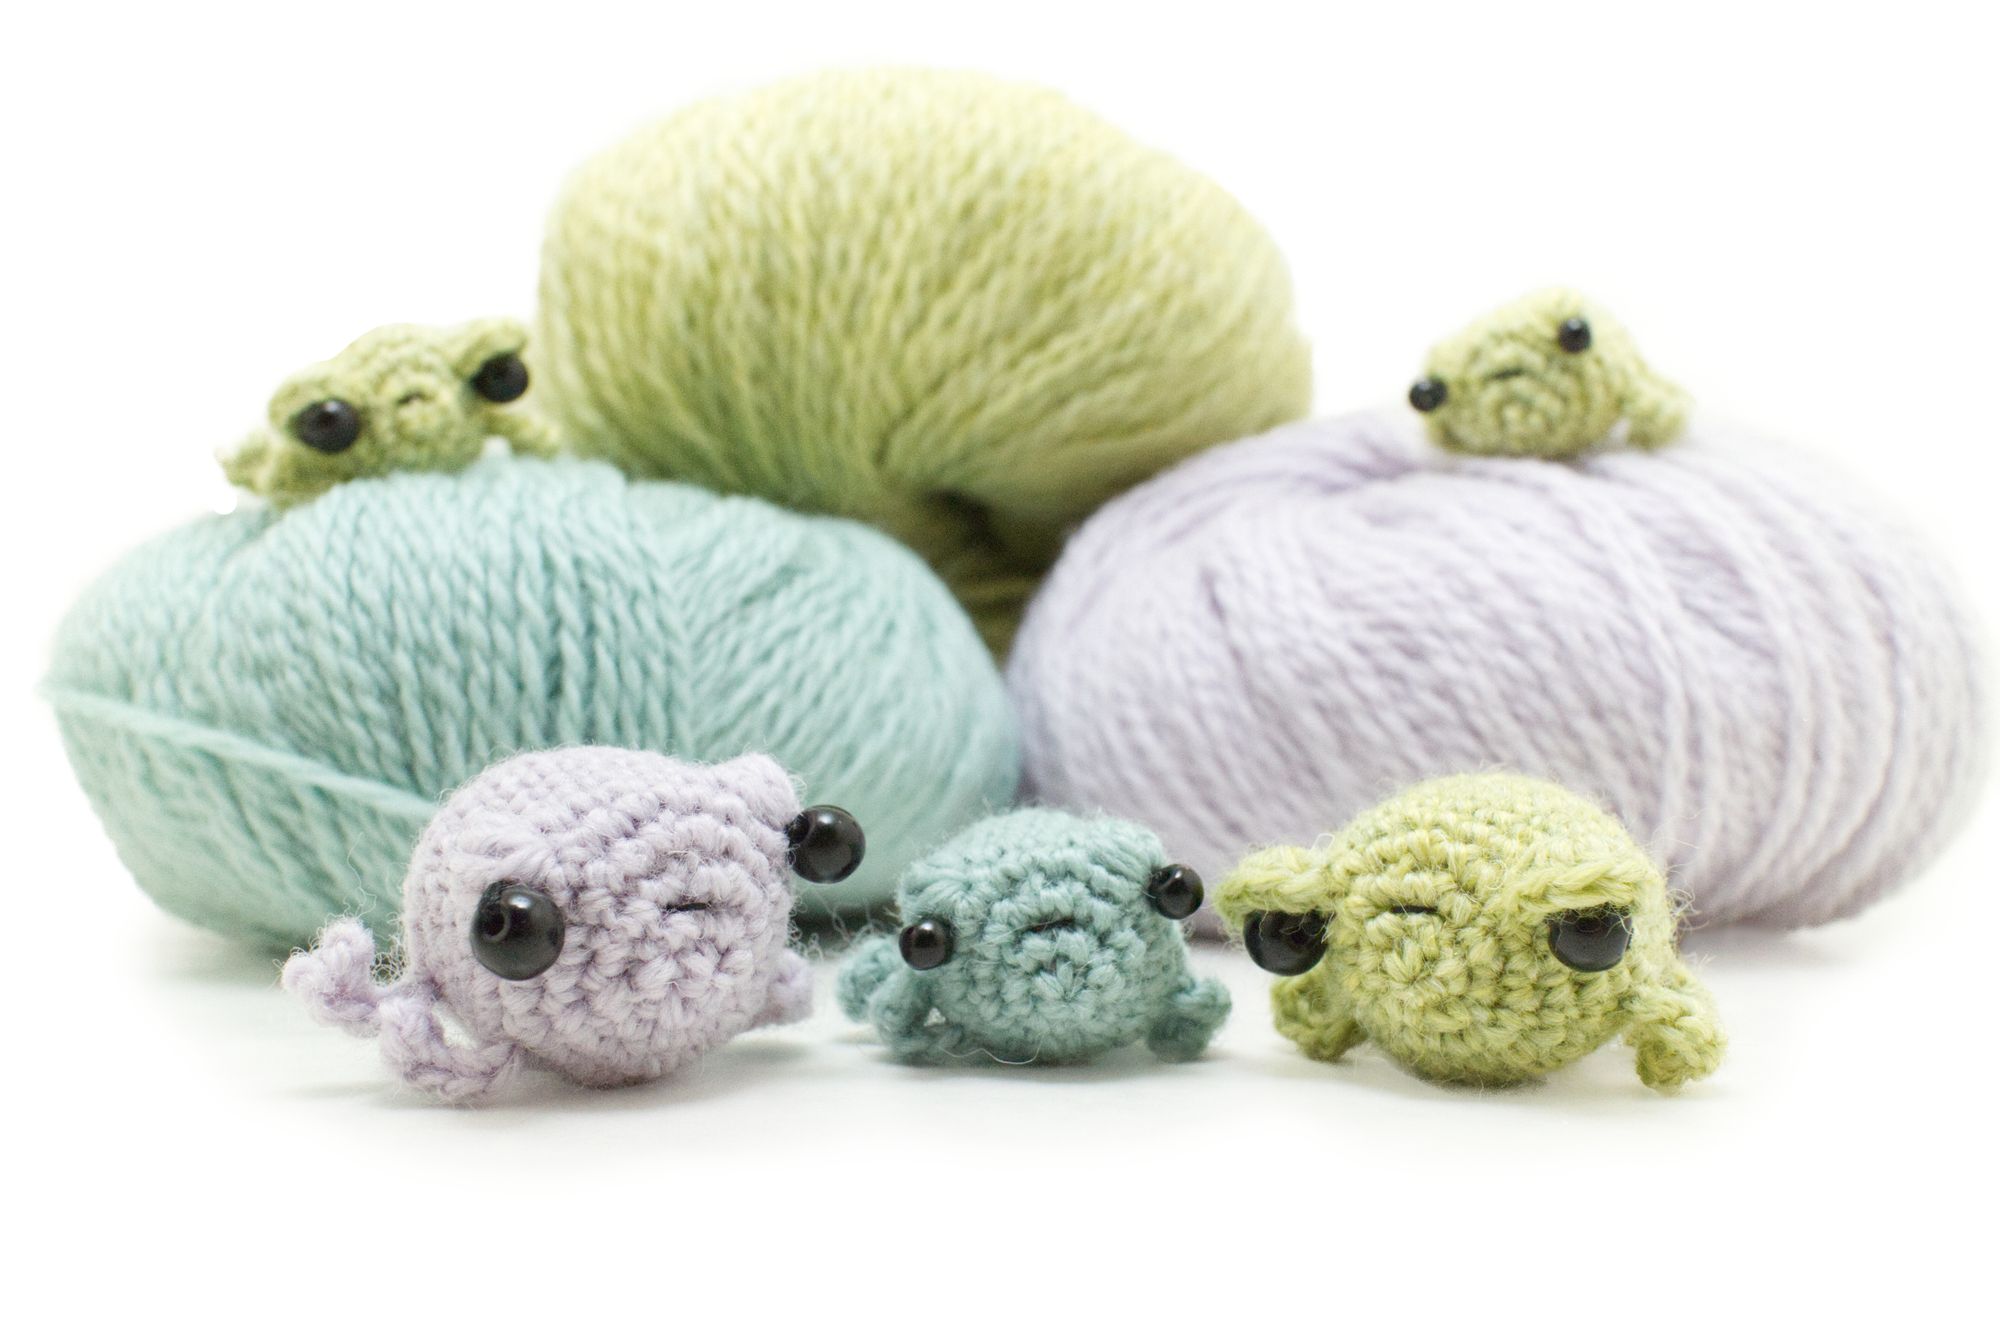 How to crochet a mini amigurumi frog